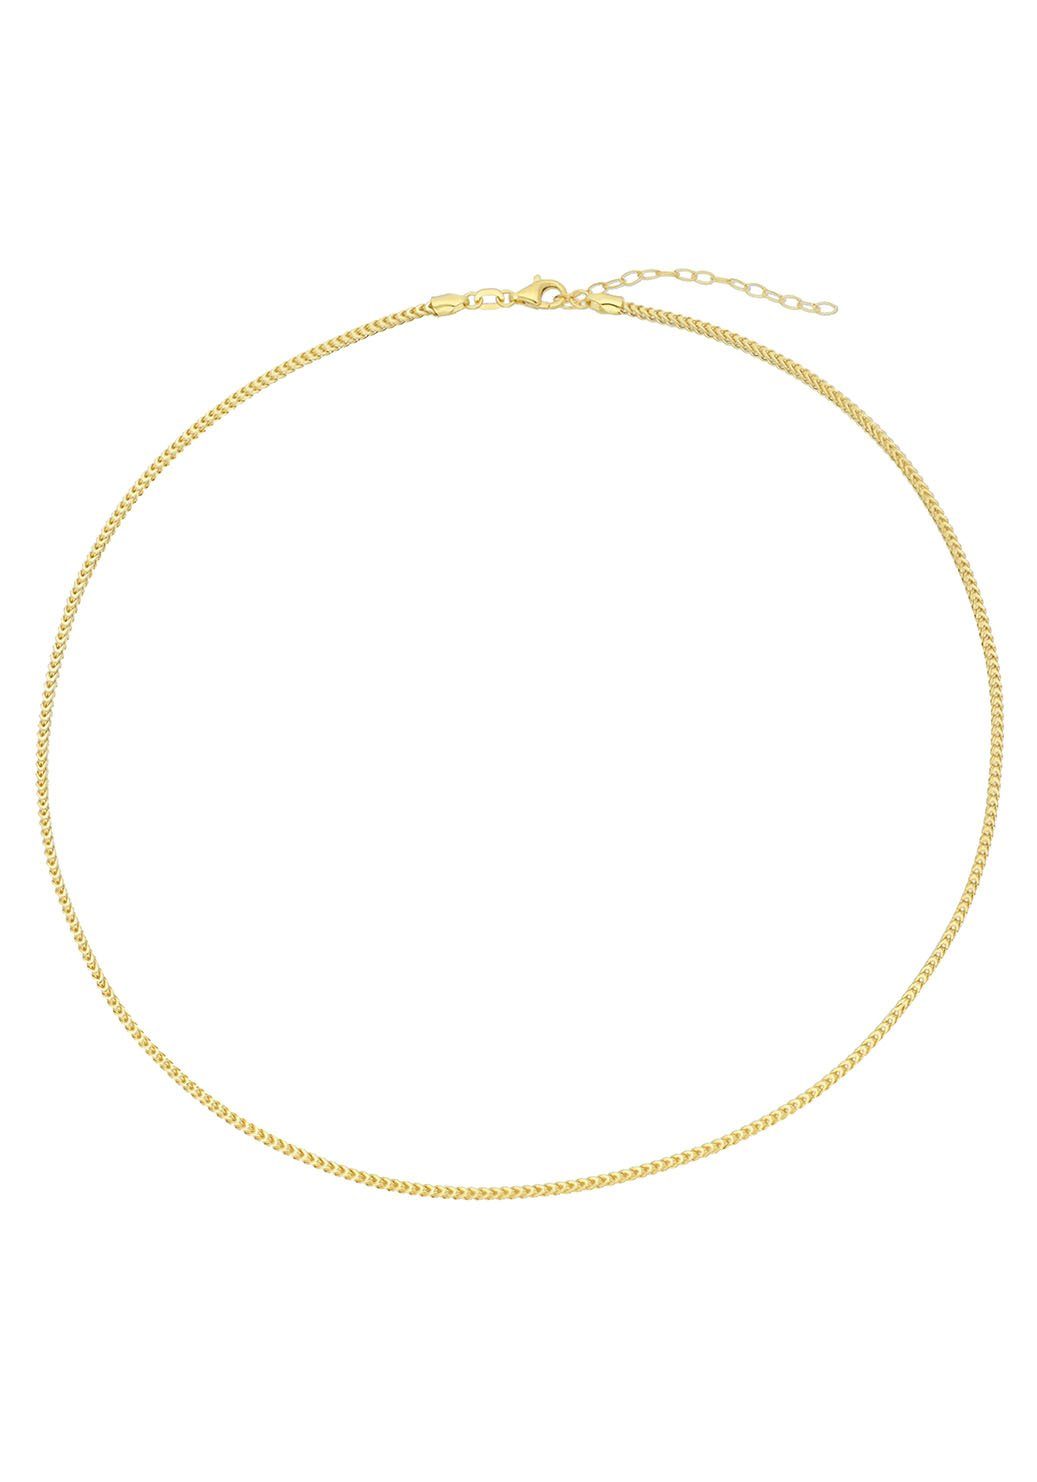 Firetti Goldkette Schmuck Geschenk Gold 585, 1,8 mm breit, zu Kleid, Shirt, Jeans, Sneaker! Anlass Geburtstag Weihnachten